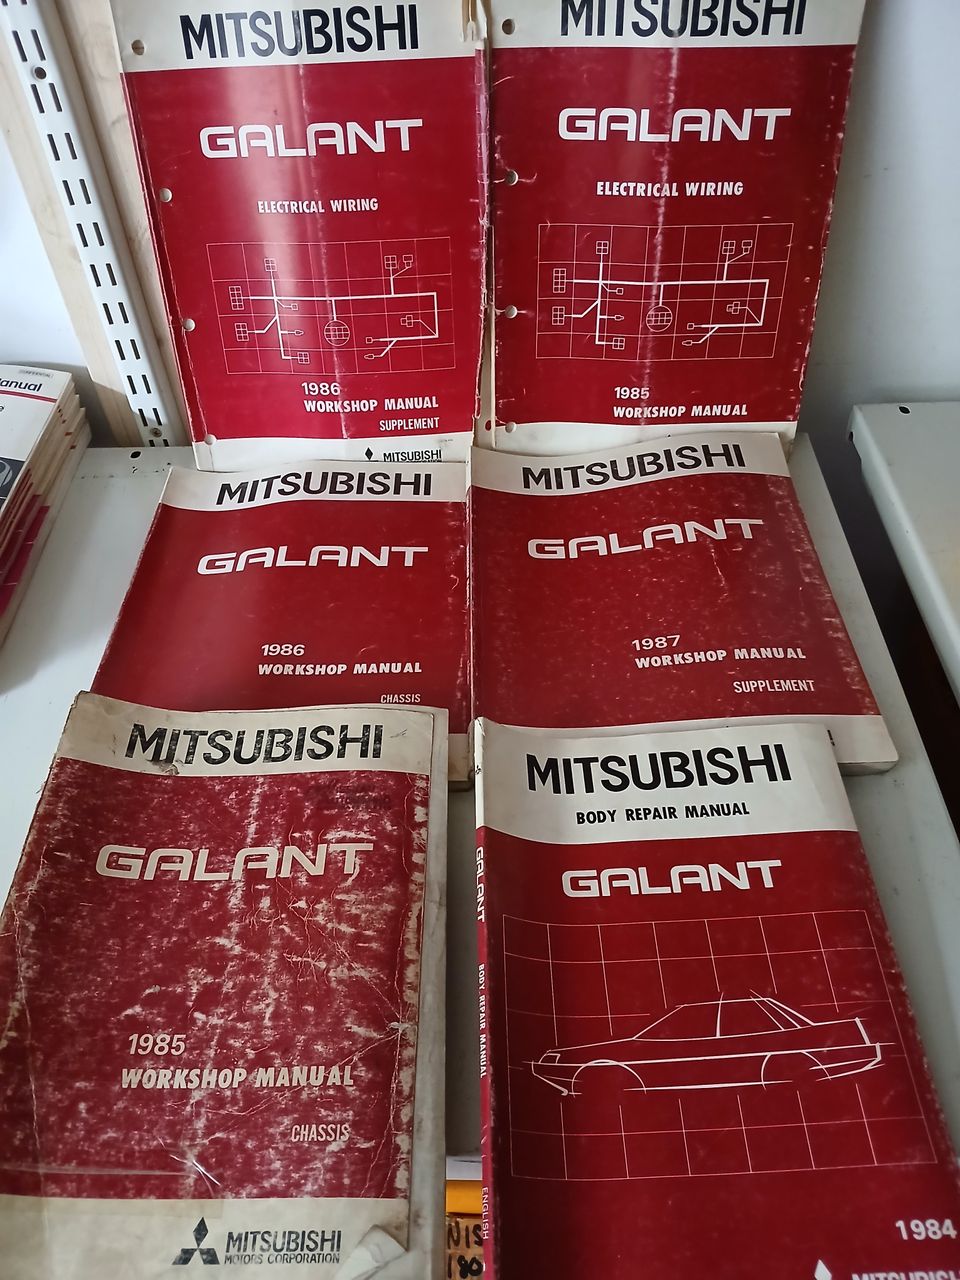 Mitsubishi Galant korjauskirjat